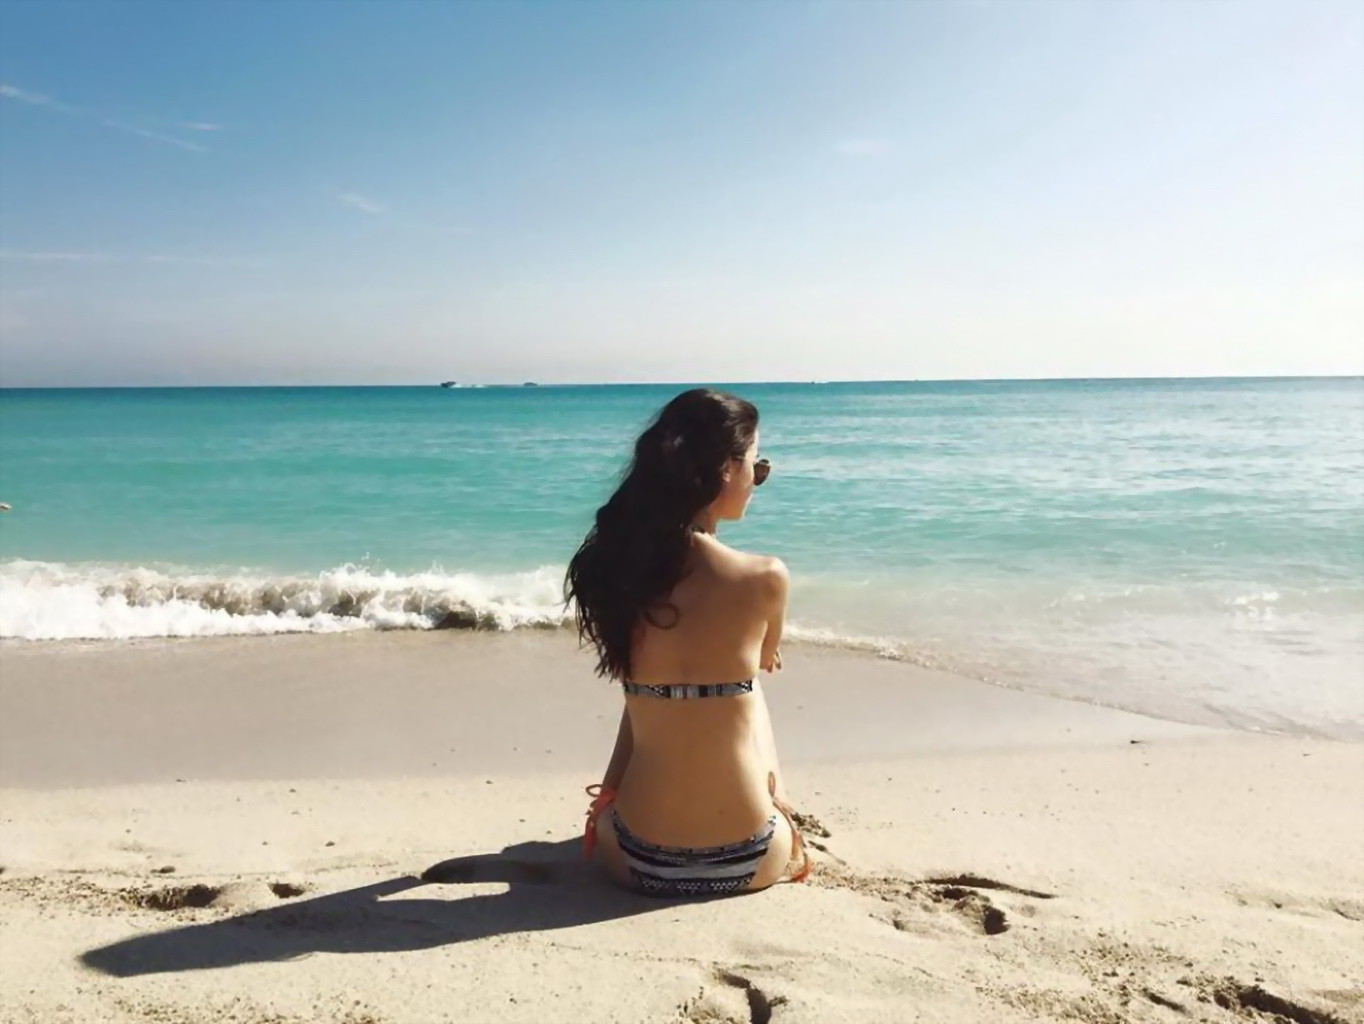 Lena meyer landrut muestra su cuerpo caliente en bikini en miami
 #75147322